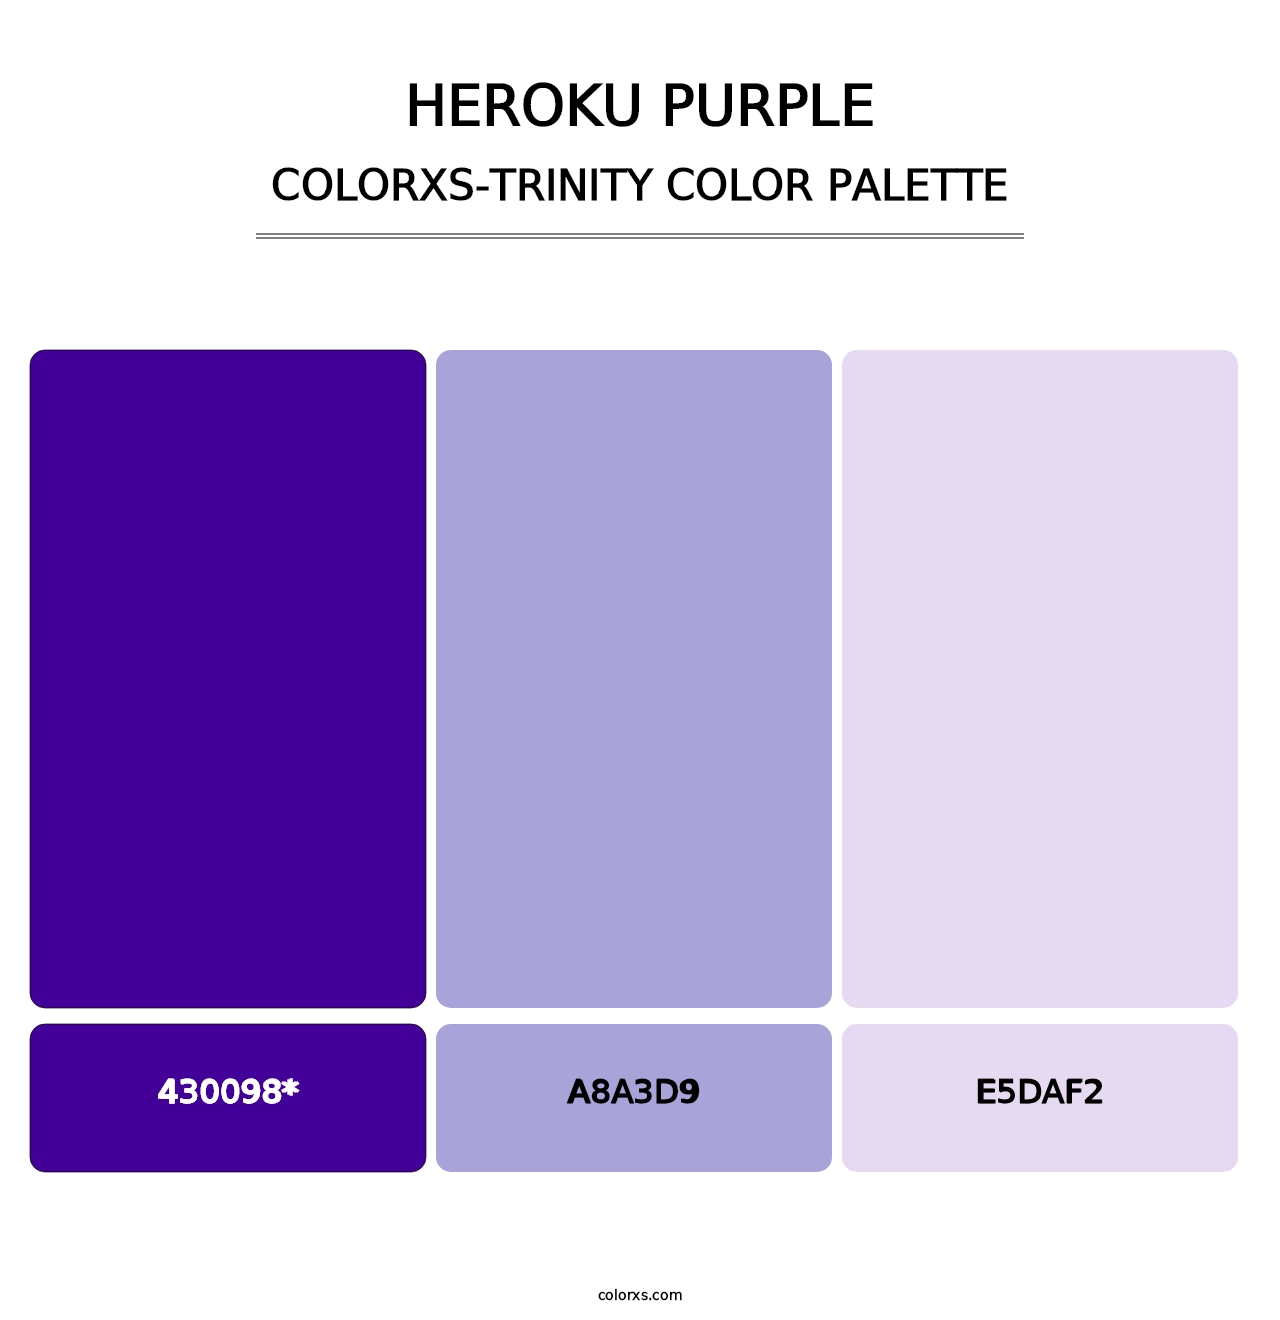 Heroku Purple - Colorxs Trinity Palette